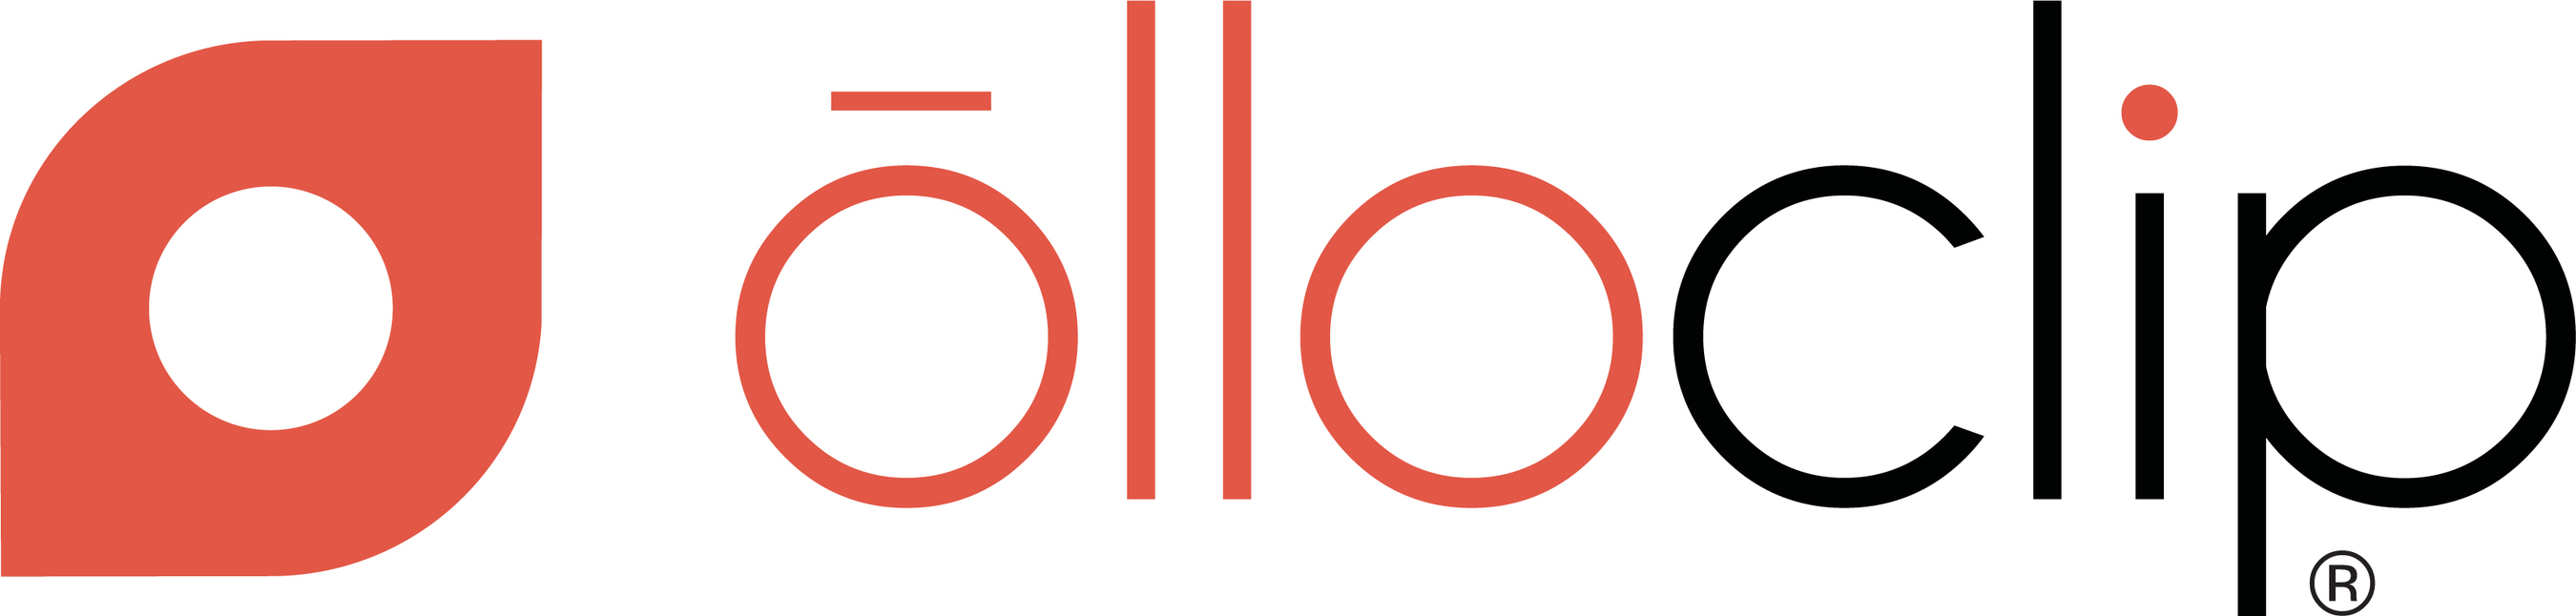 olloclip logo